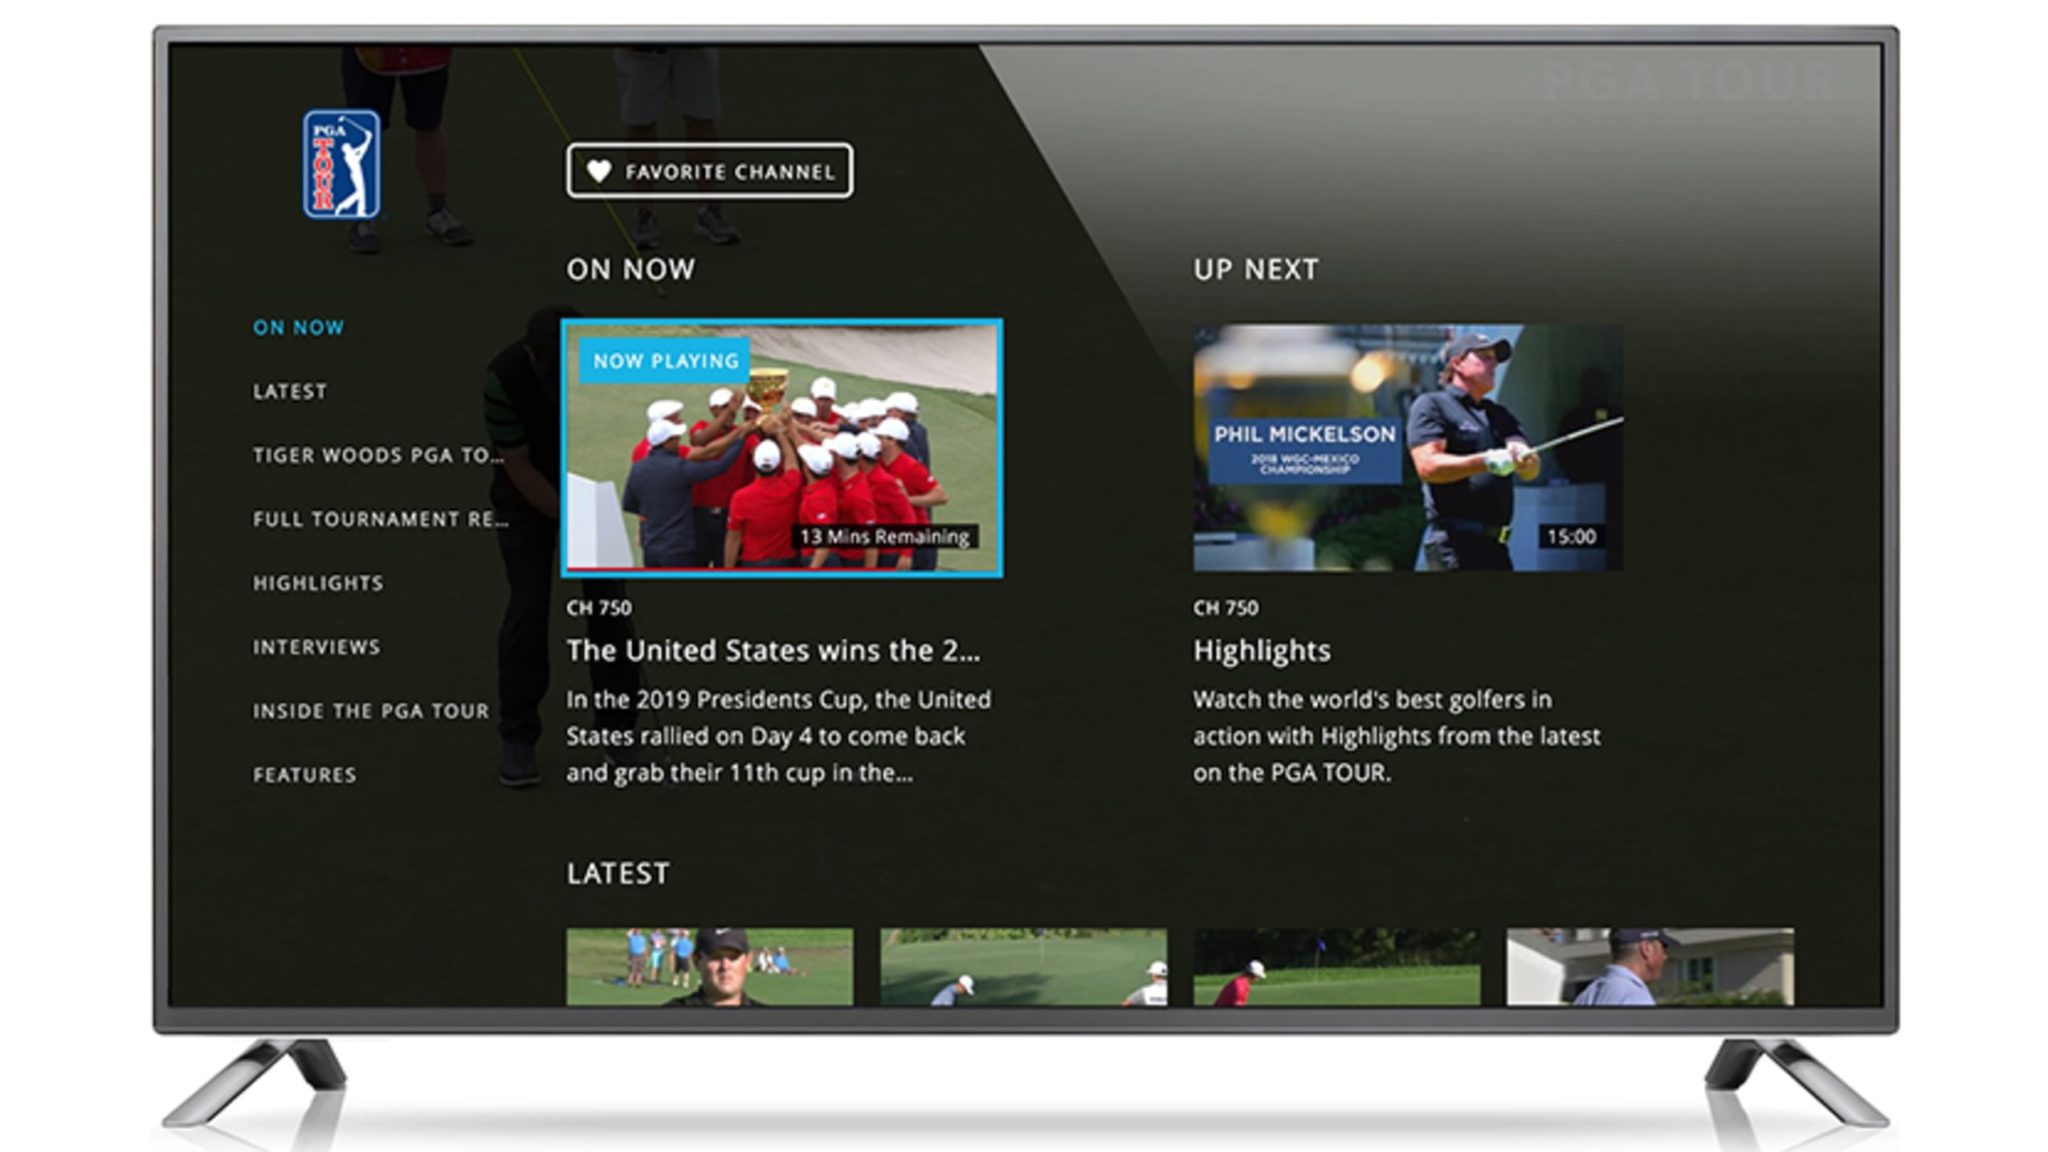 The Free Streaming Service XUMO TV Renews its Partnership With The PGA